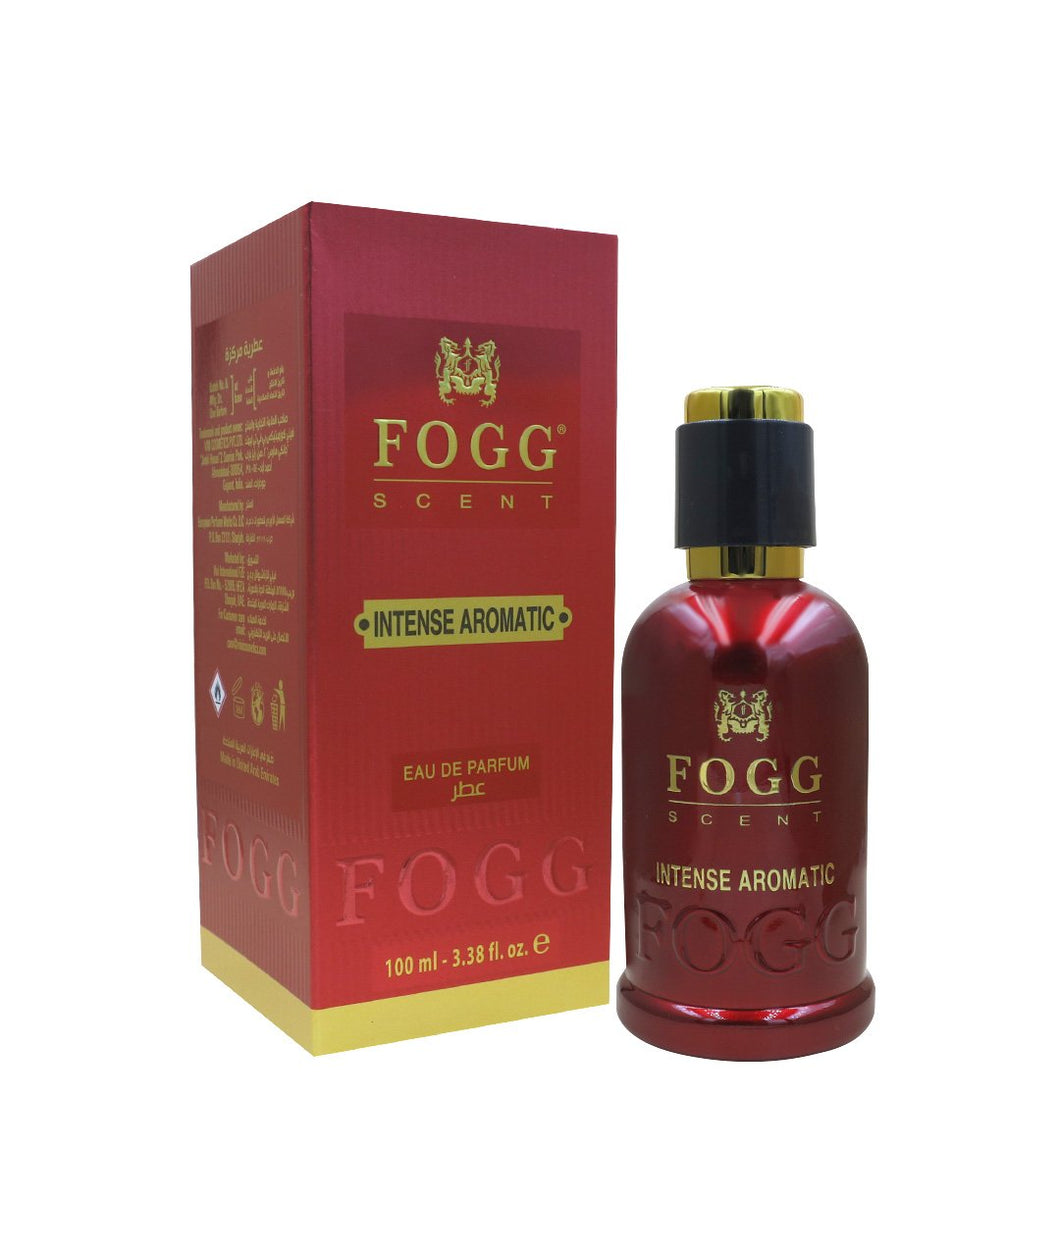 FOGG Scent Intense Aromatic